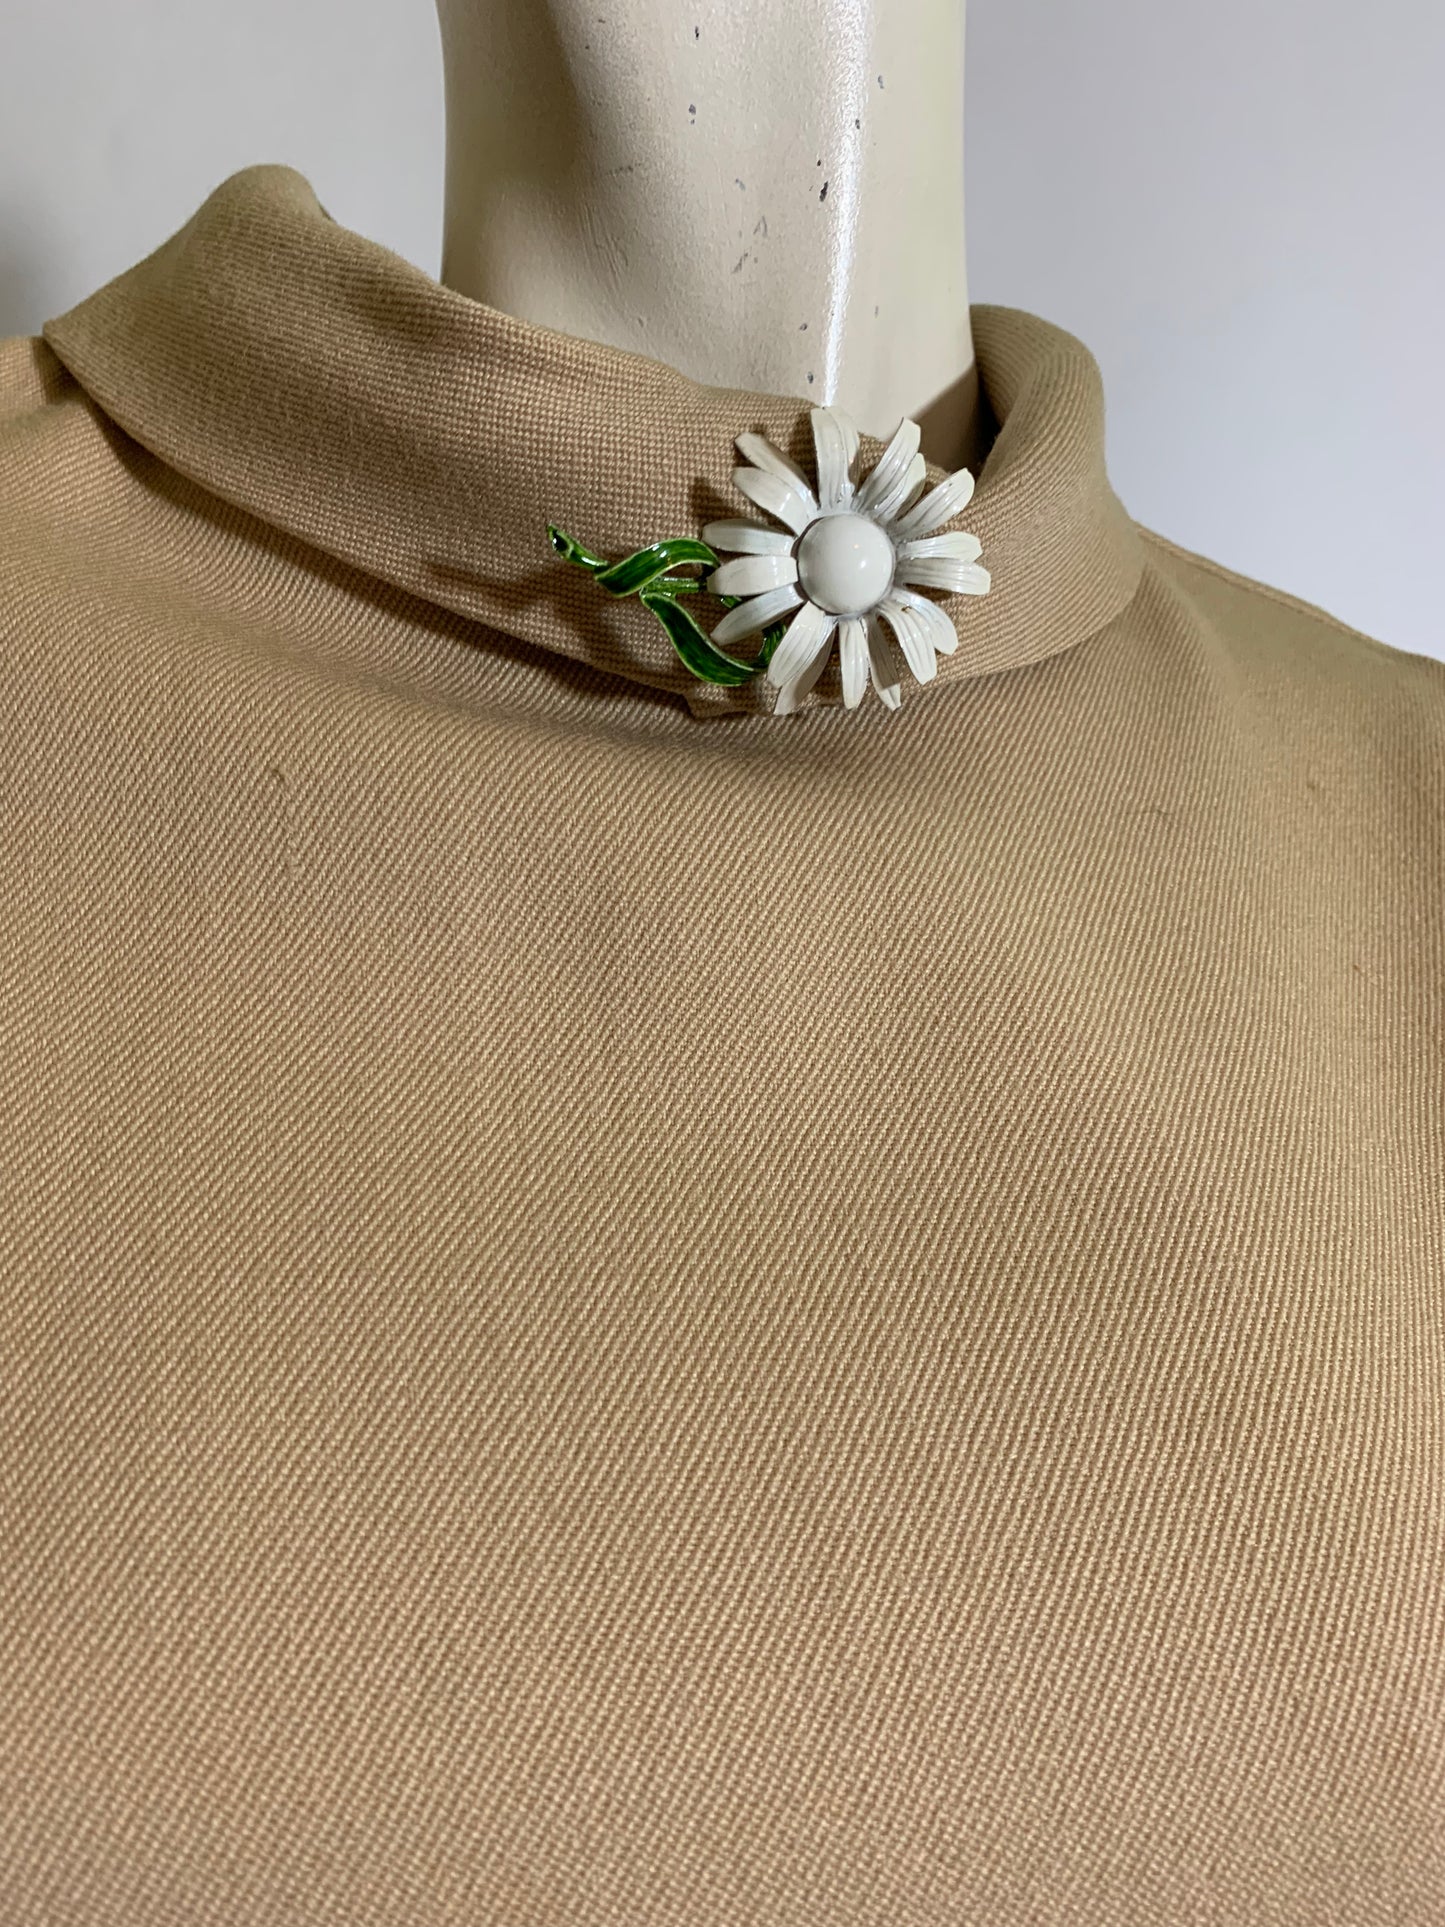 Chic Folded Collar Tan Dress circa 1960s